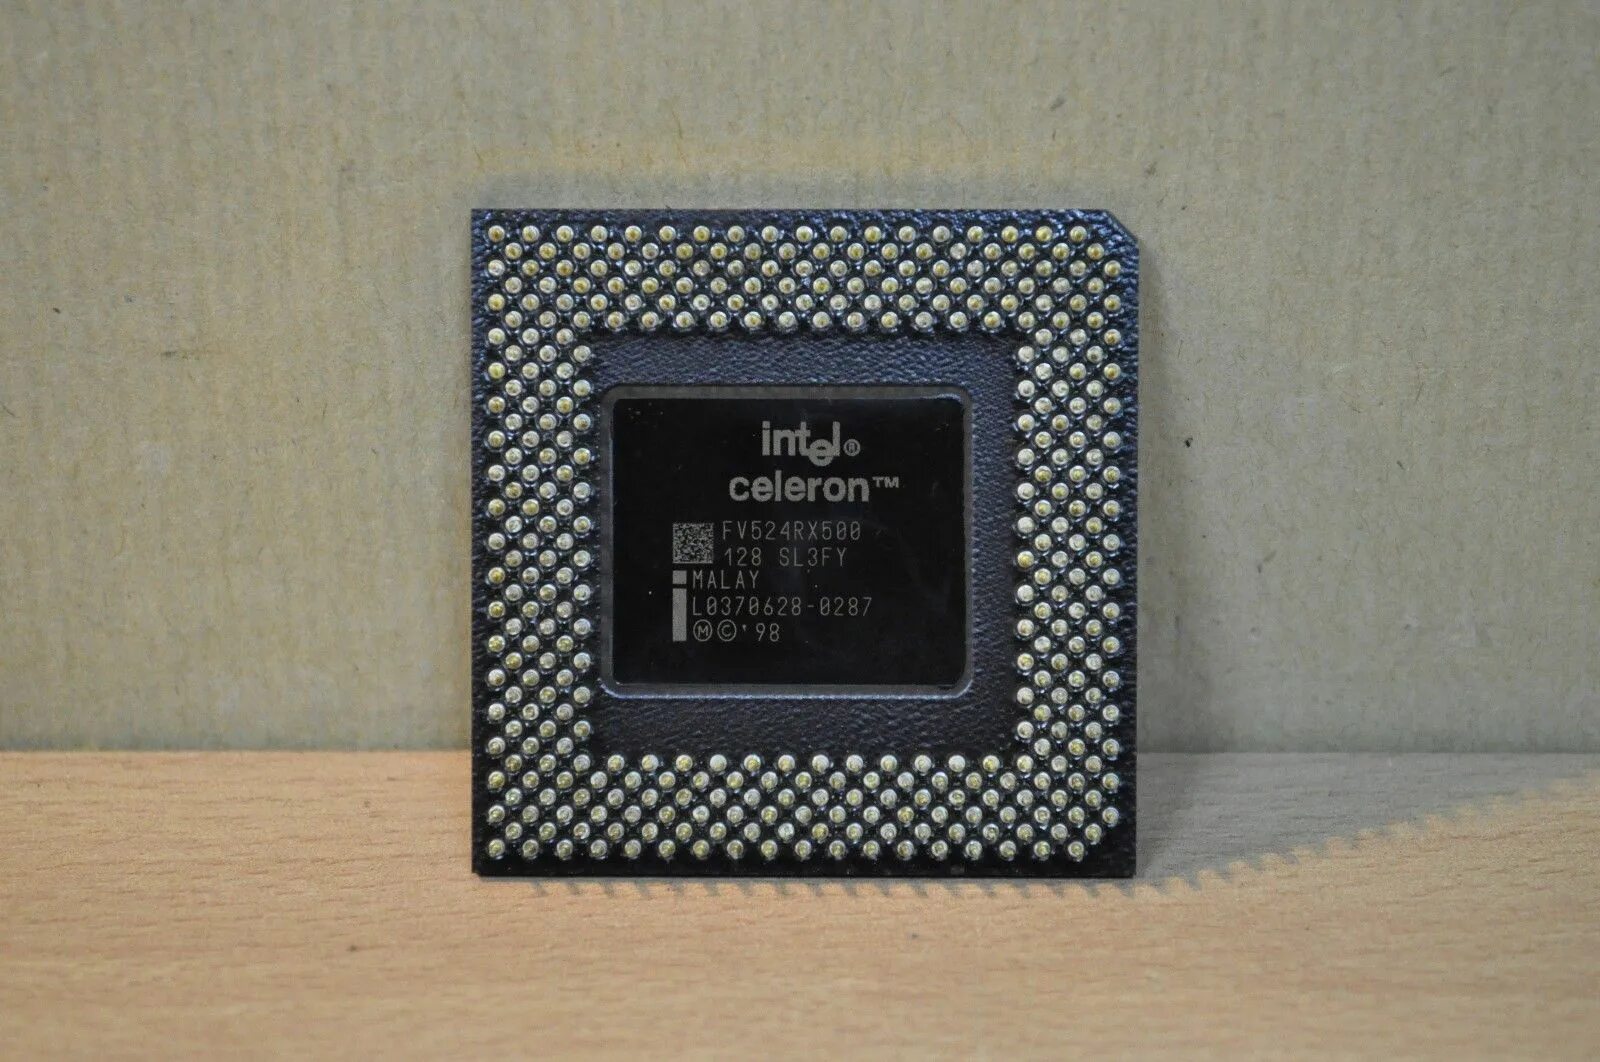 Intel Celeron fv524rx500. Интел селерон fv524rx466. Intel Celeron fv524rx500 sl3fy. Celeron 500 MHZ.